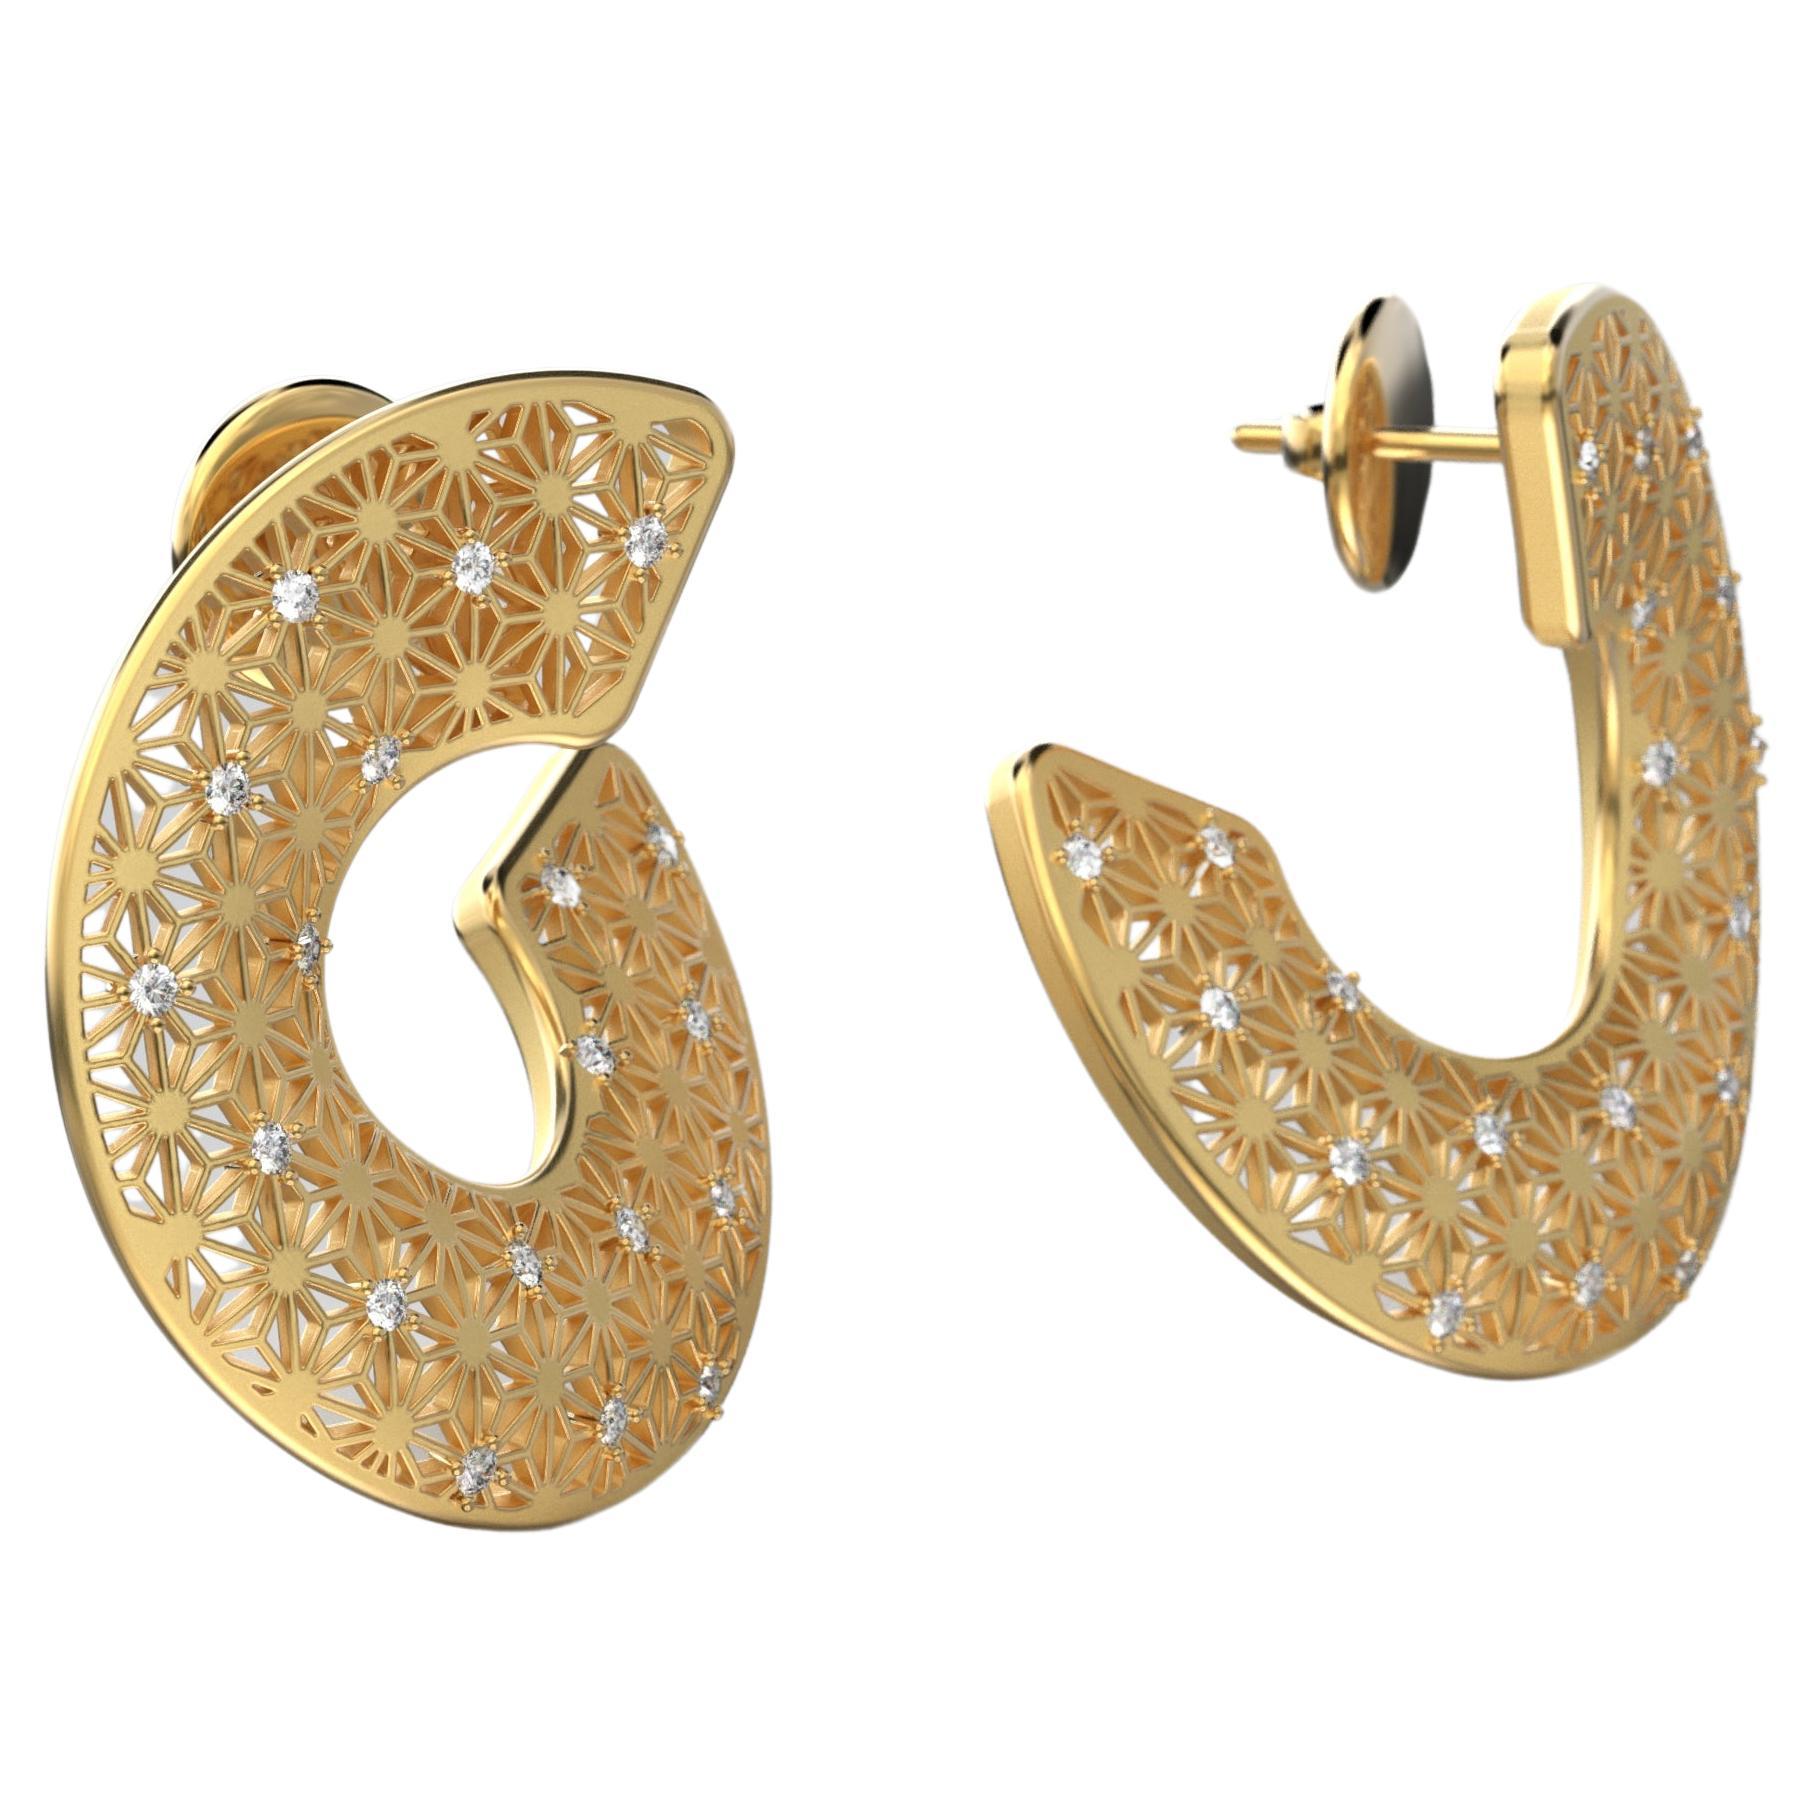 Statement Italian Diamond Earrings in 14k Genuine Gold by Oltremare Gioielli For Sale